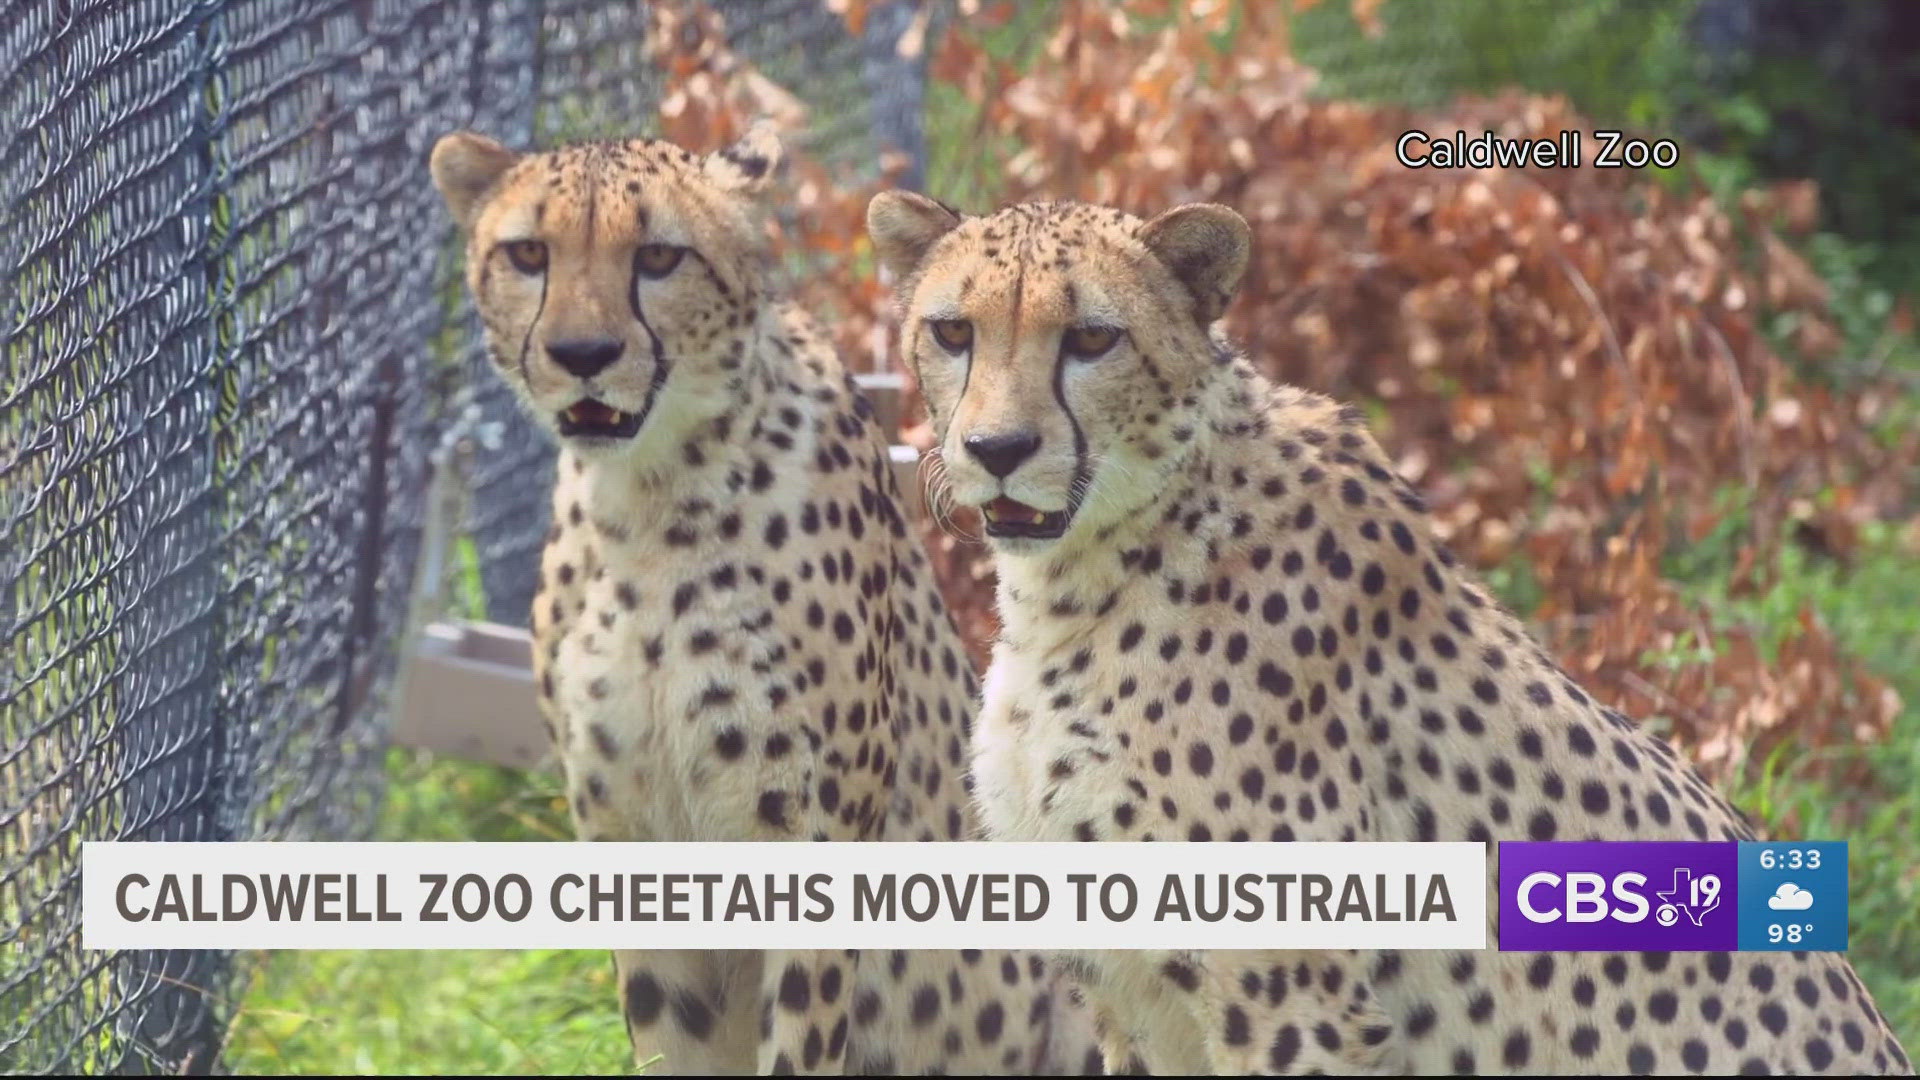 Caldwell Zoo Cheetahs moved to Australia